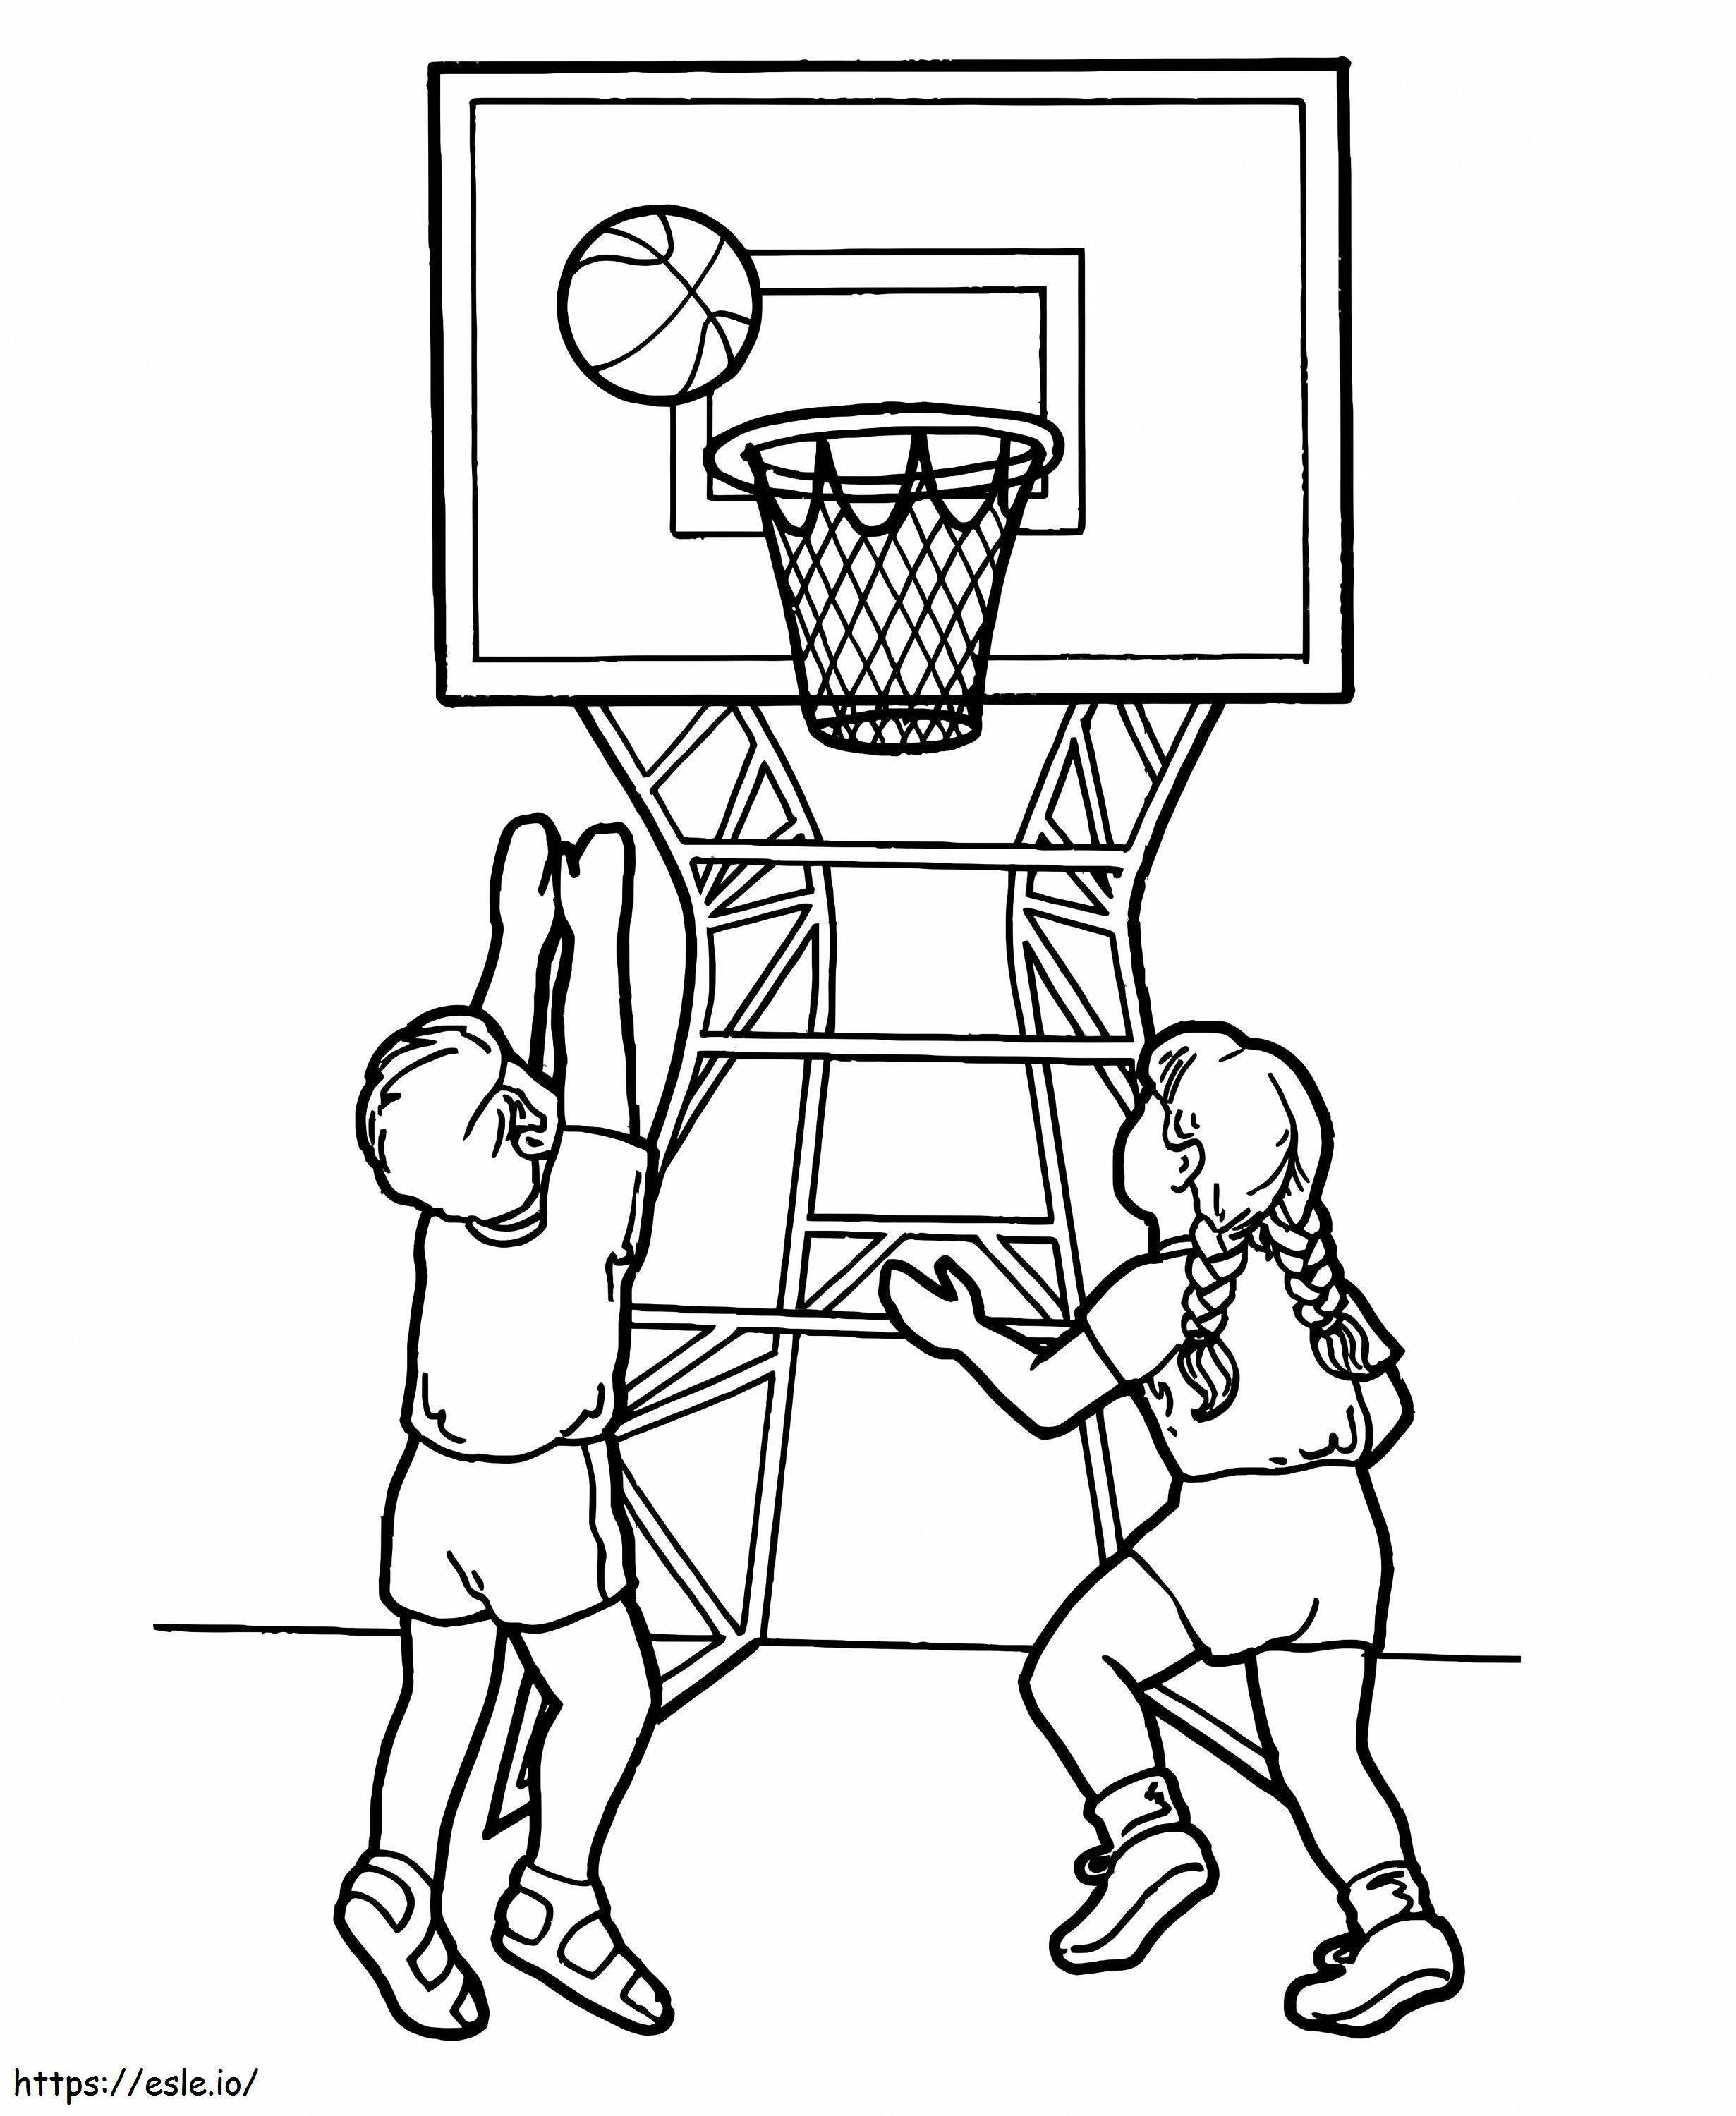 Twee kinderen die basketbal spelen kleurplaat kleurplaat